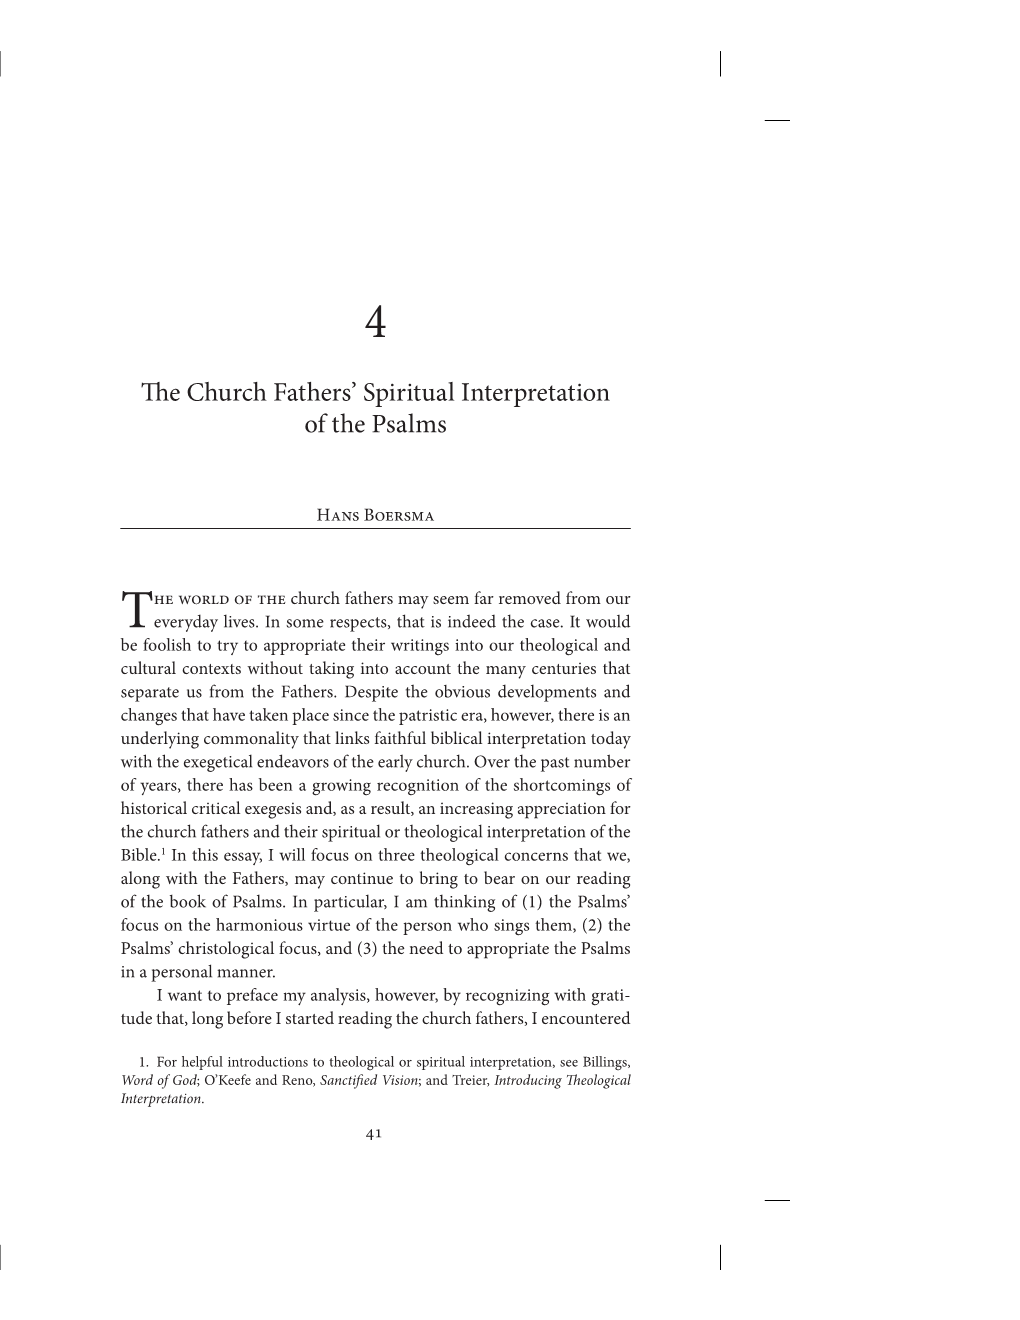 The Church Fathers' Spiritual Interpretation of the Psalms